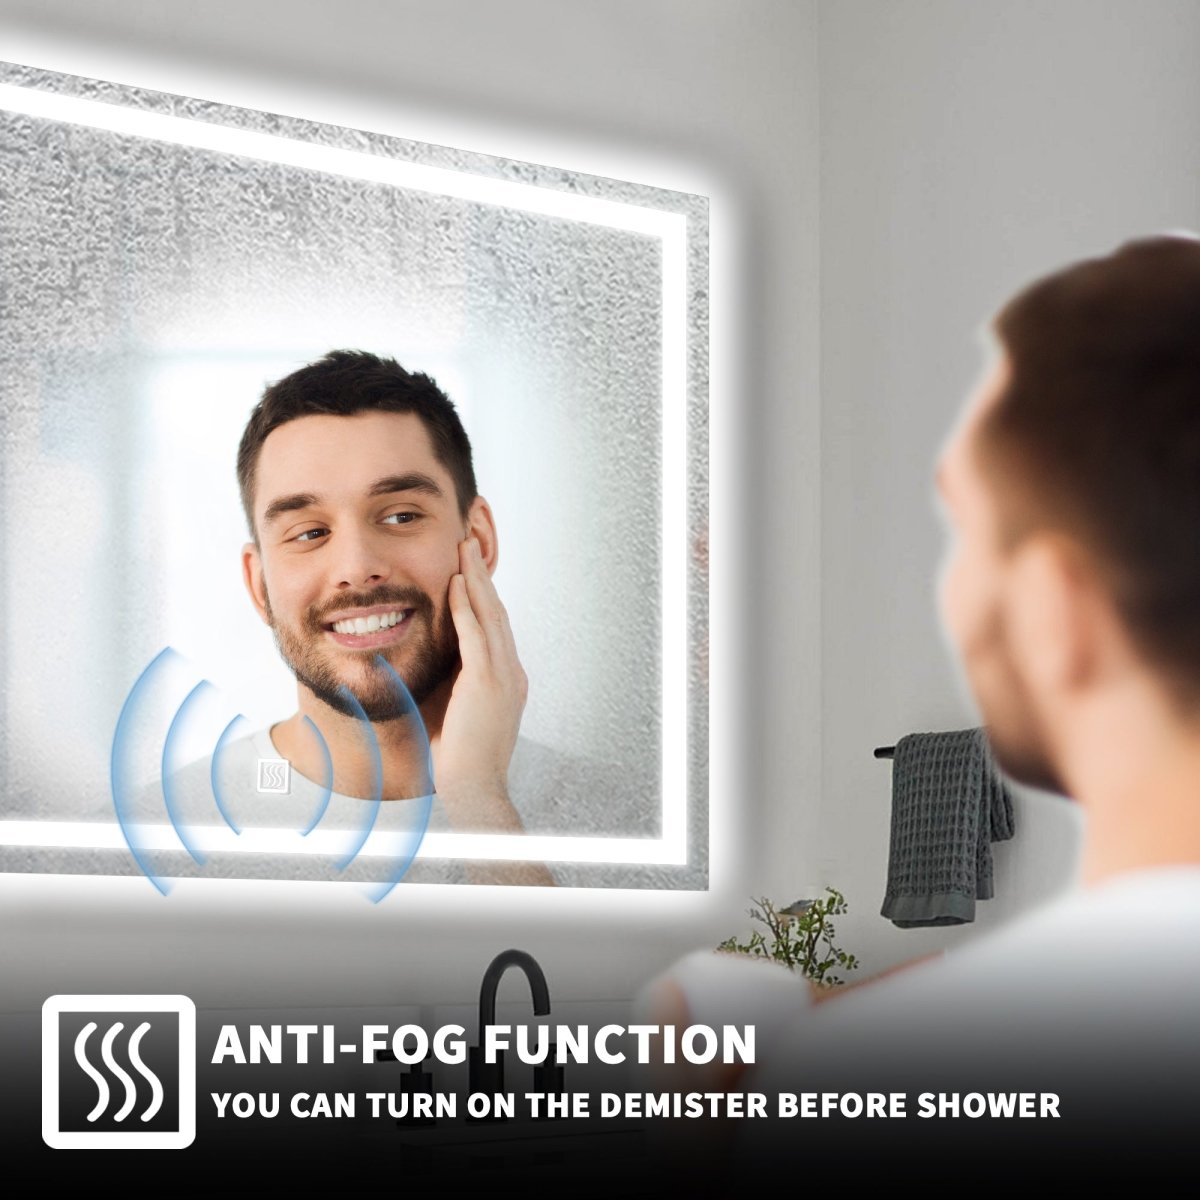 Allsumhome Vistas Customized Rectangle LED Bathroom Mirror, Backlit